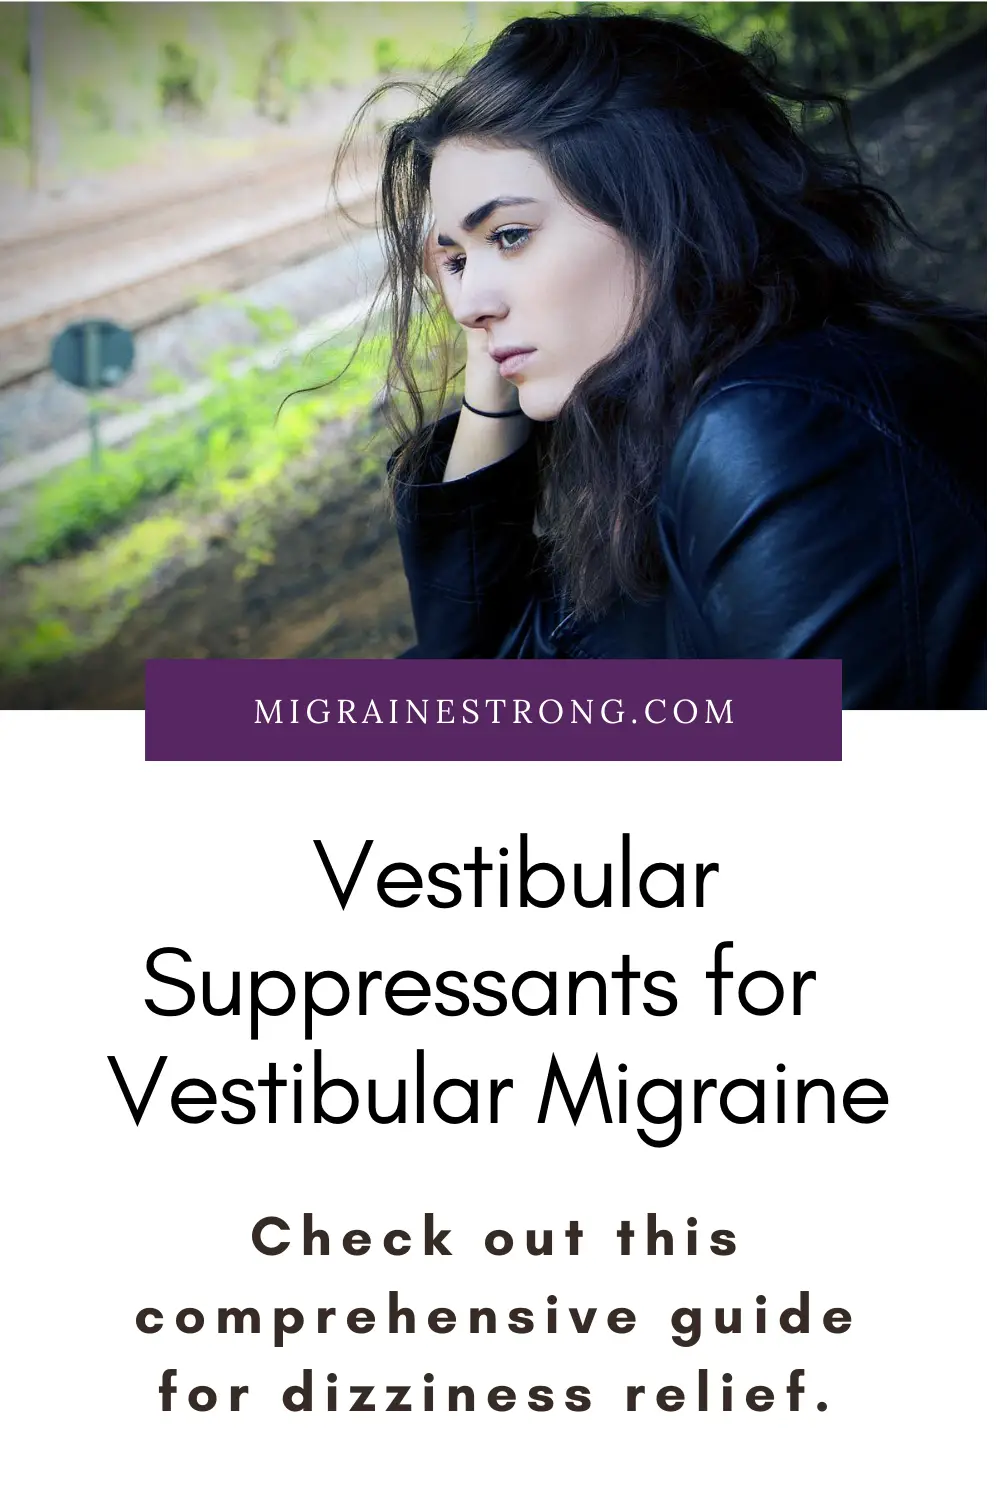 How to Use Vestibular Suppressants to Best Treat Vestibular Migraine